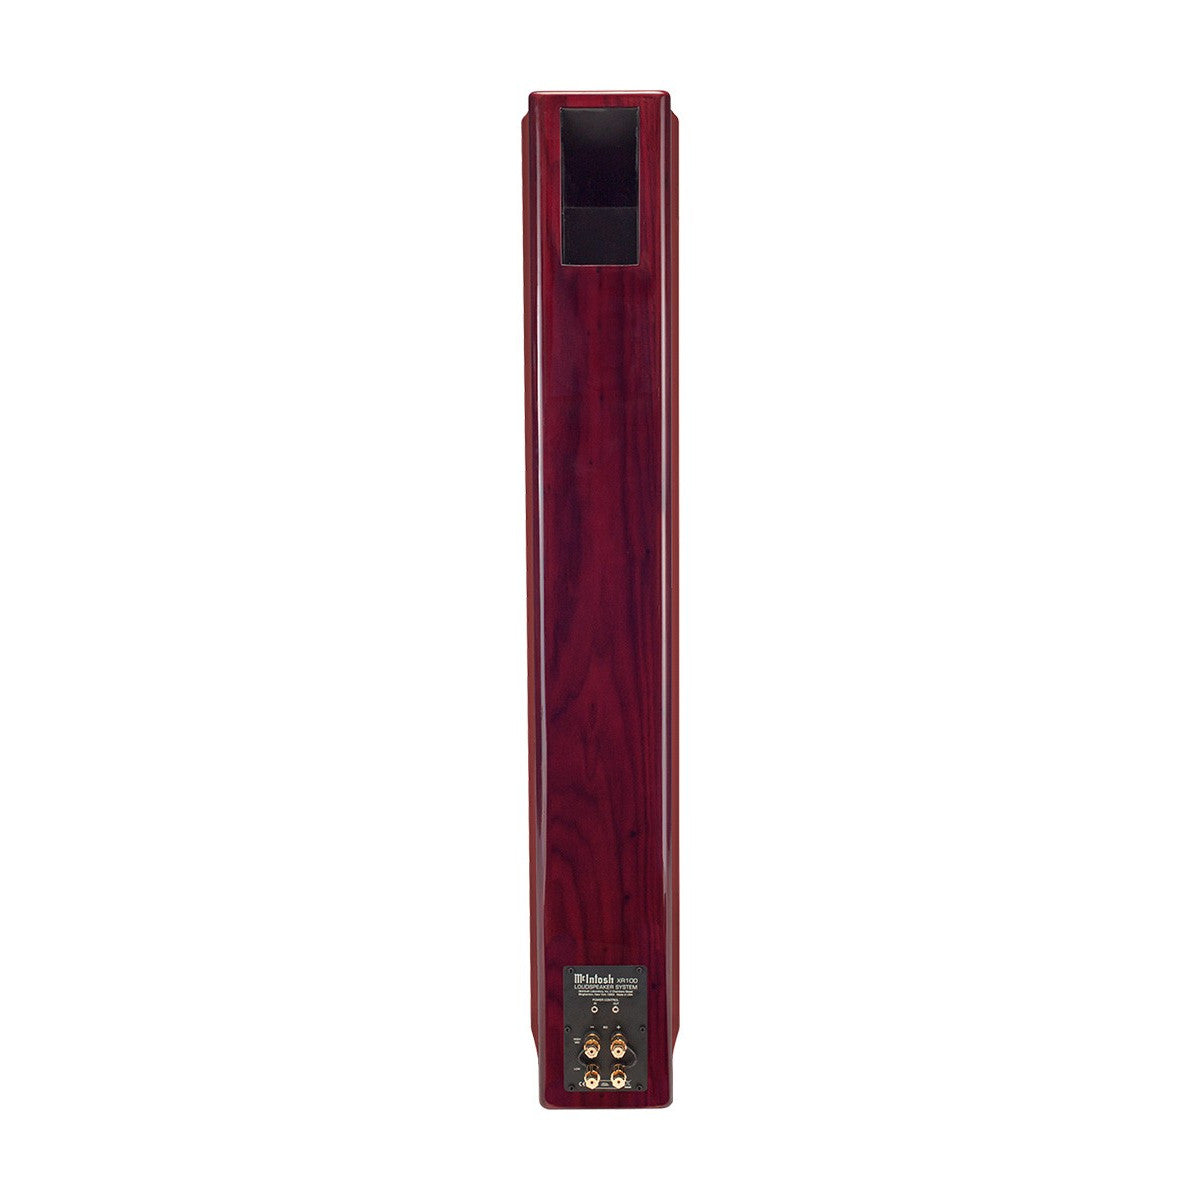 McIntosh XR100 Floorstanding Speaker (Red Walnut) - Rear View